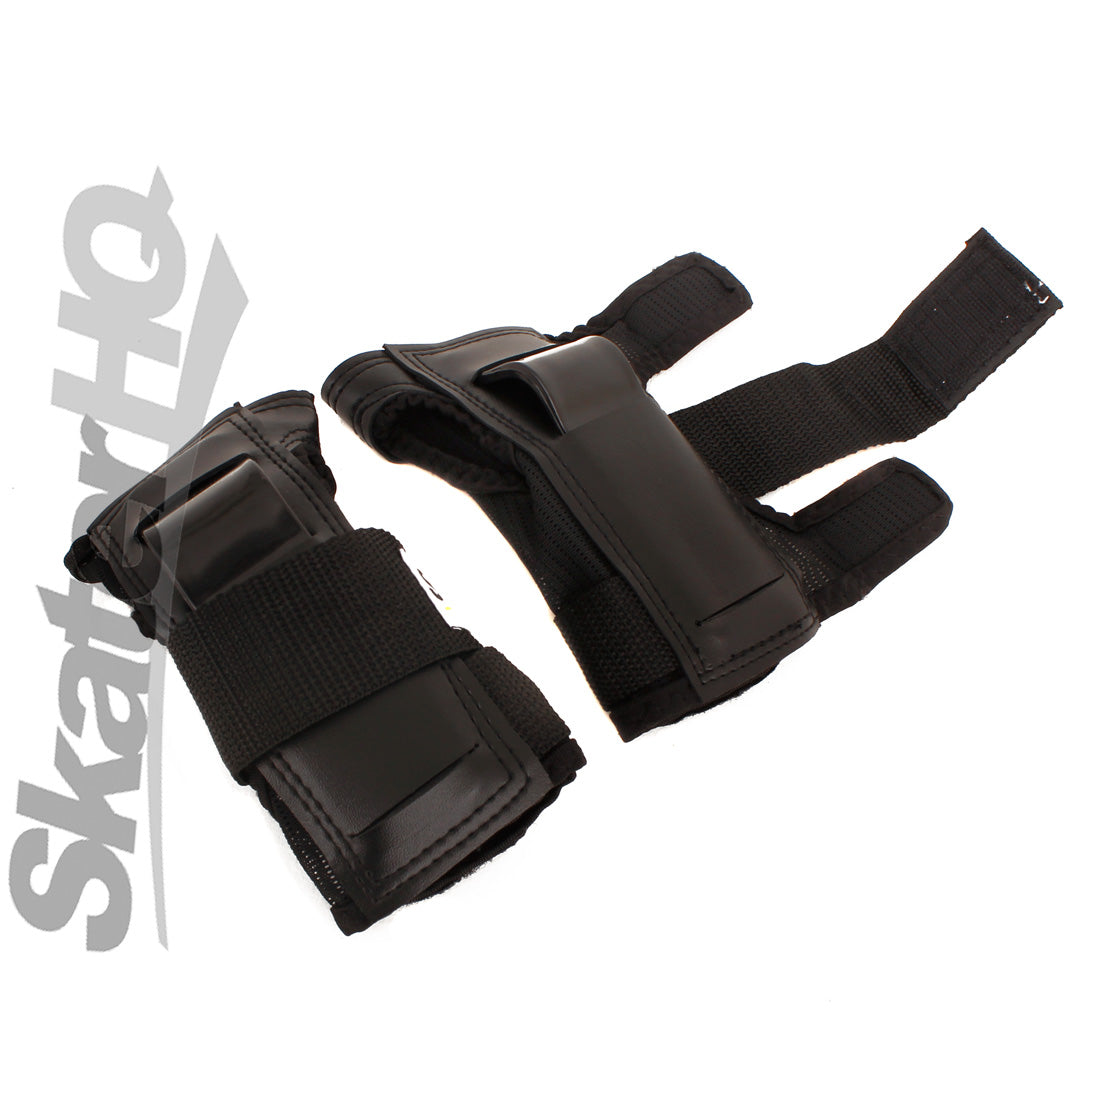 Skater HQ Wrist Guard - Grommet Protective Gear